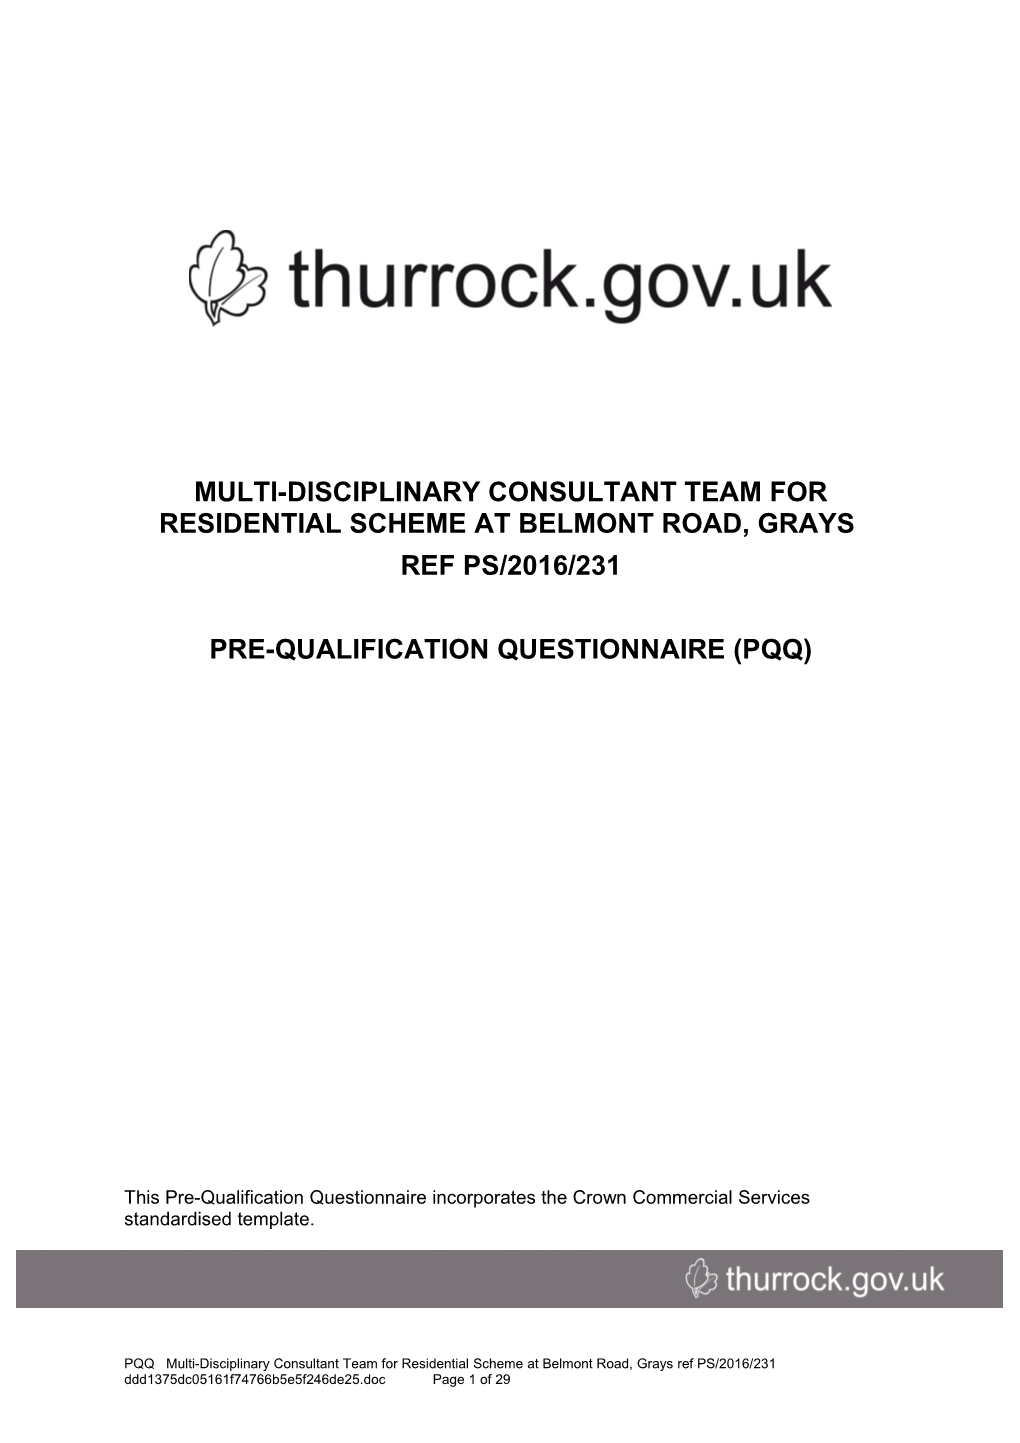 Thurrock Council - Pre-Qualification Questionnaire: Multi-Disciplinary Consultant Team